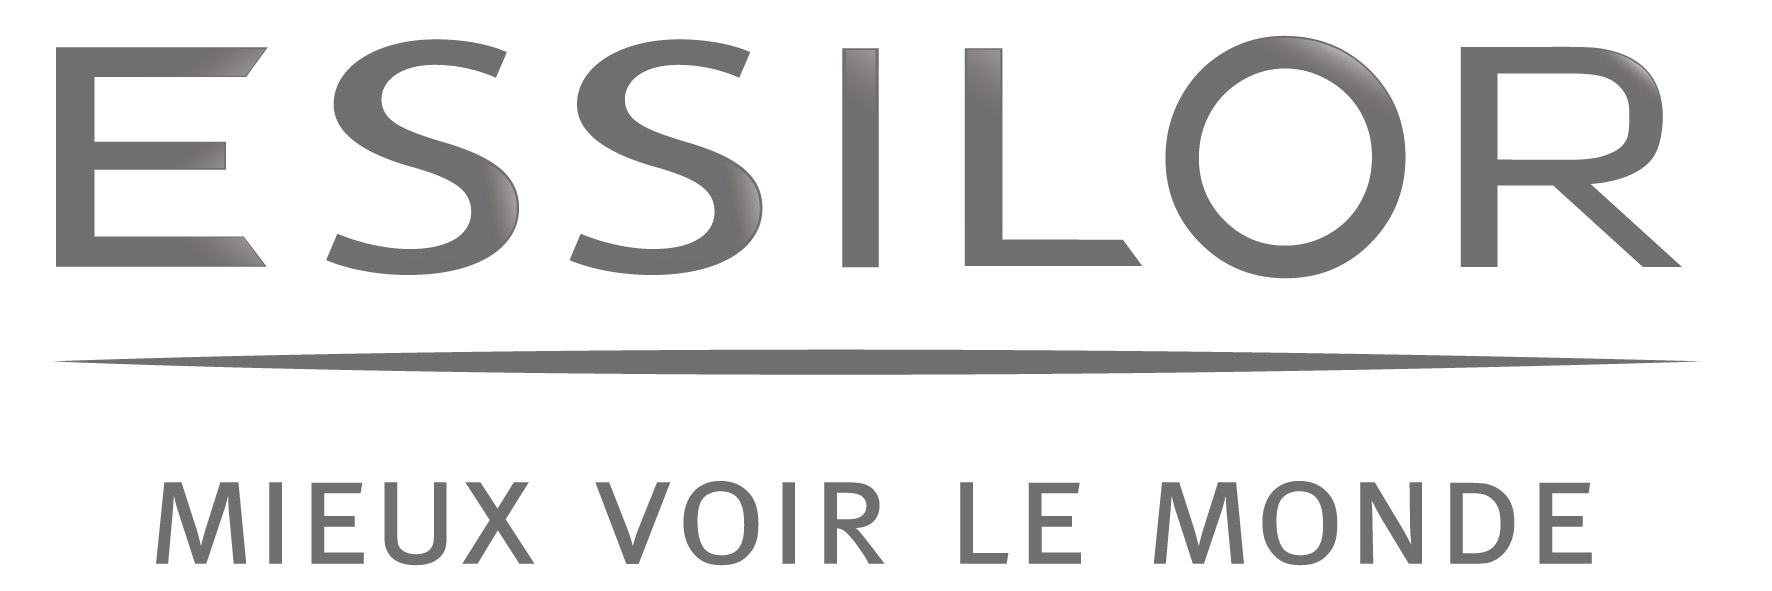 Logo_Groupe_Essilor.jpg